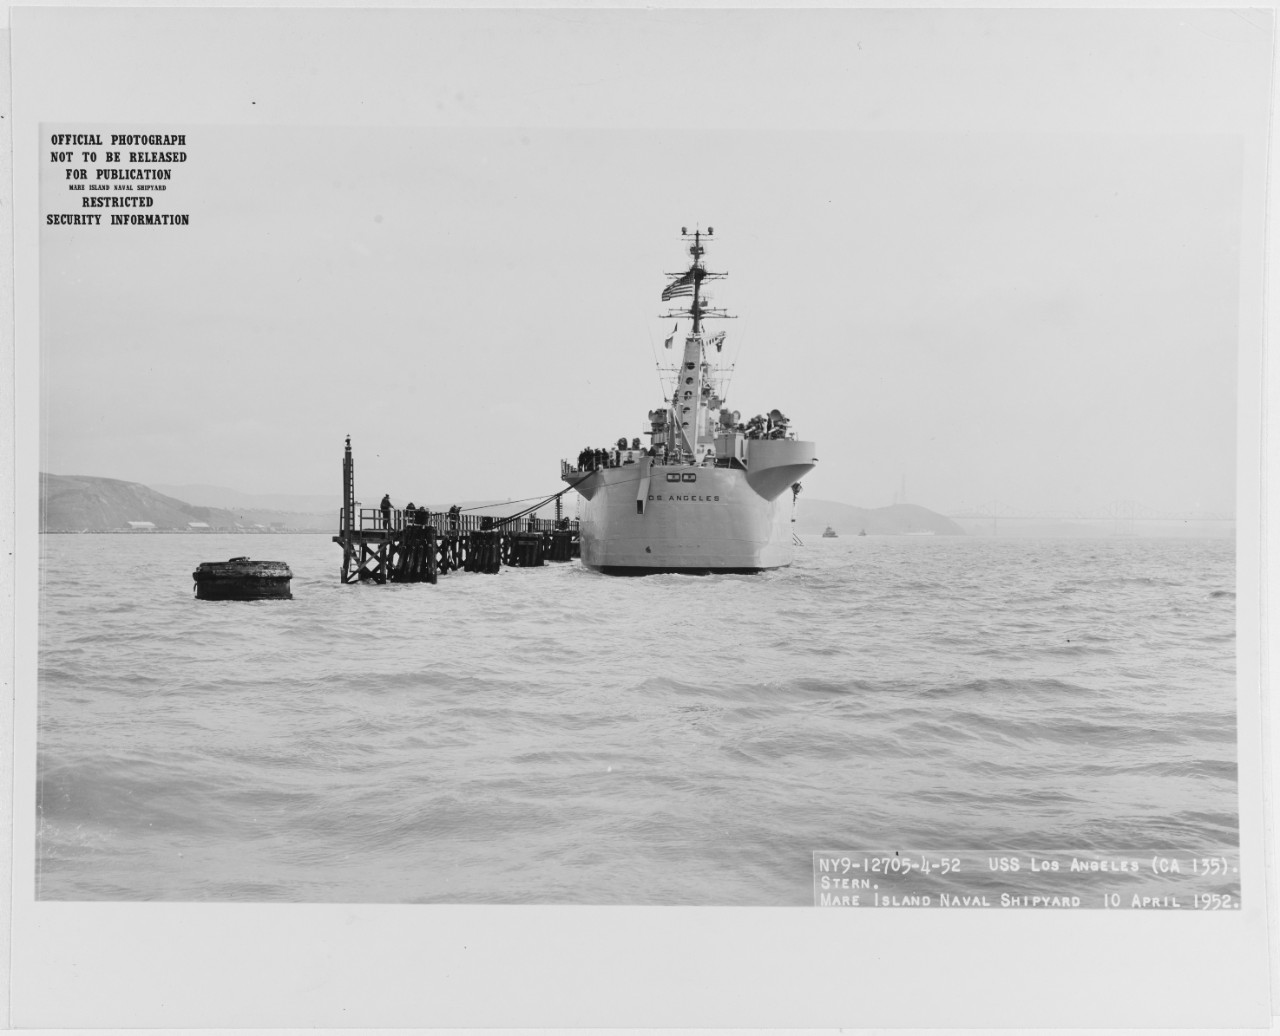 USS LOS ANGELES (CA-135)